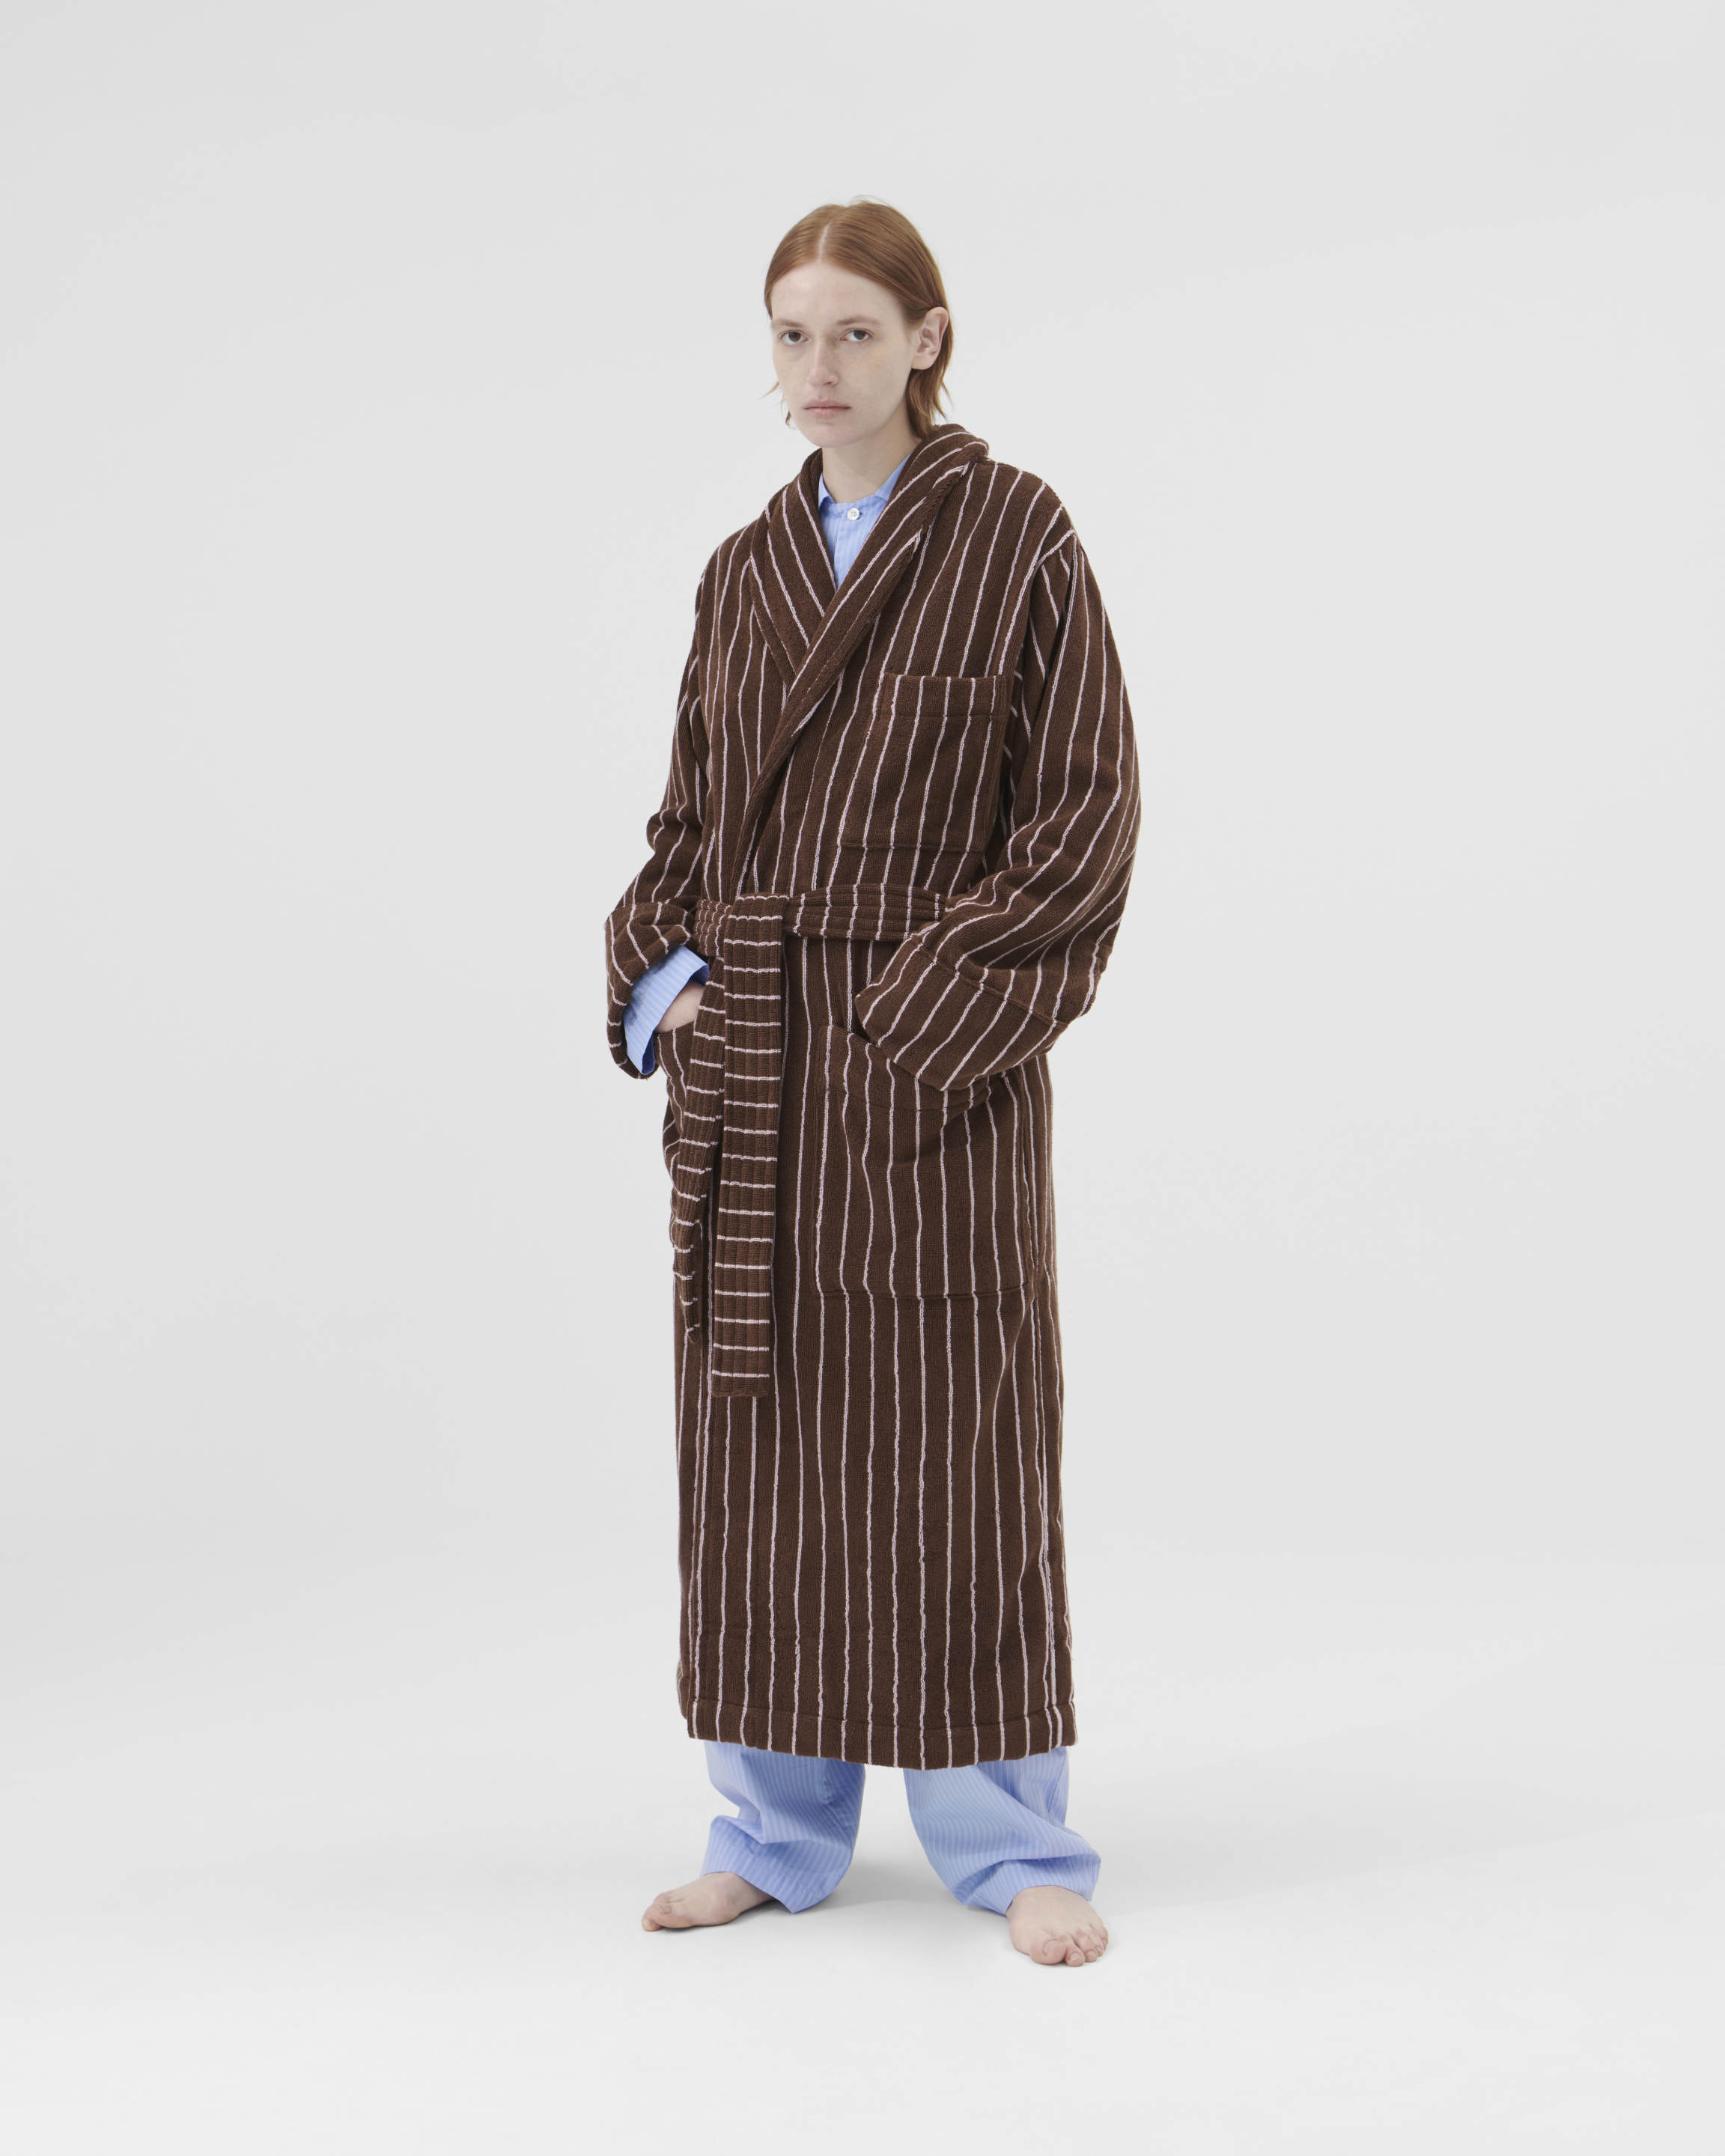 Sleepwear and bathrobe